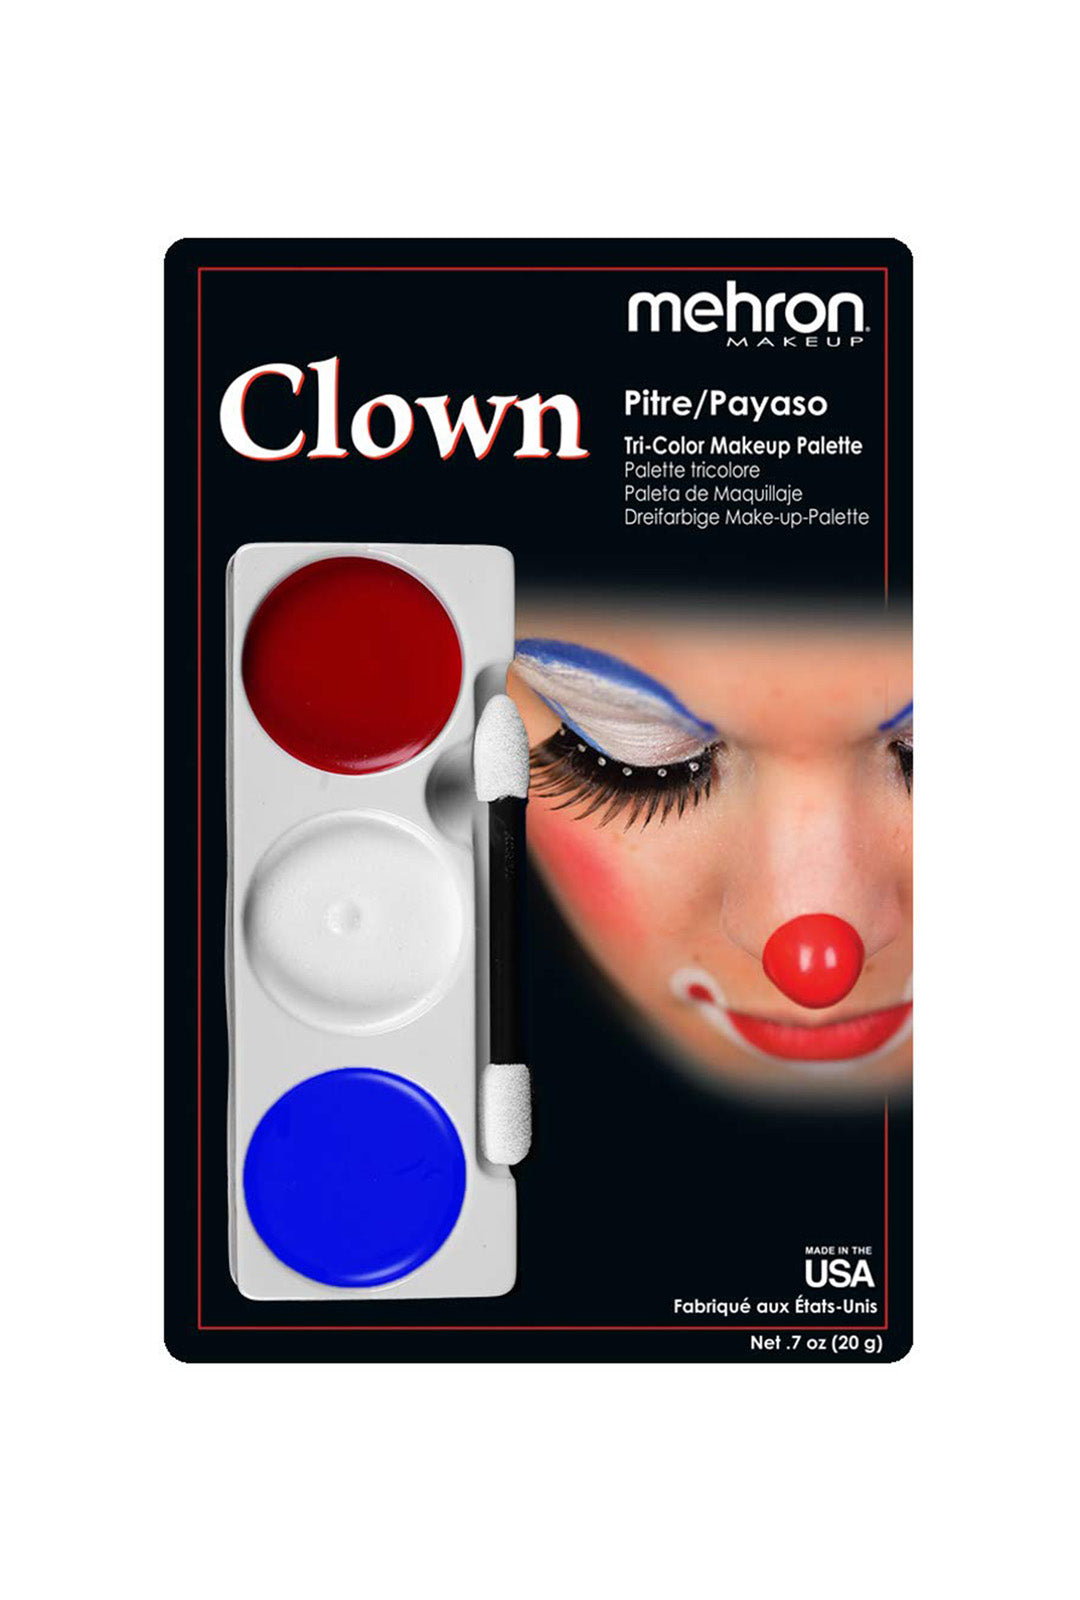 Tri-Colour Makeup Palette: Clown Perth Hurly-Burly